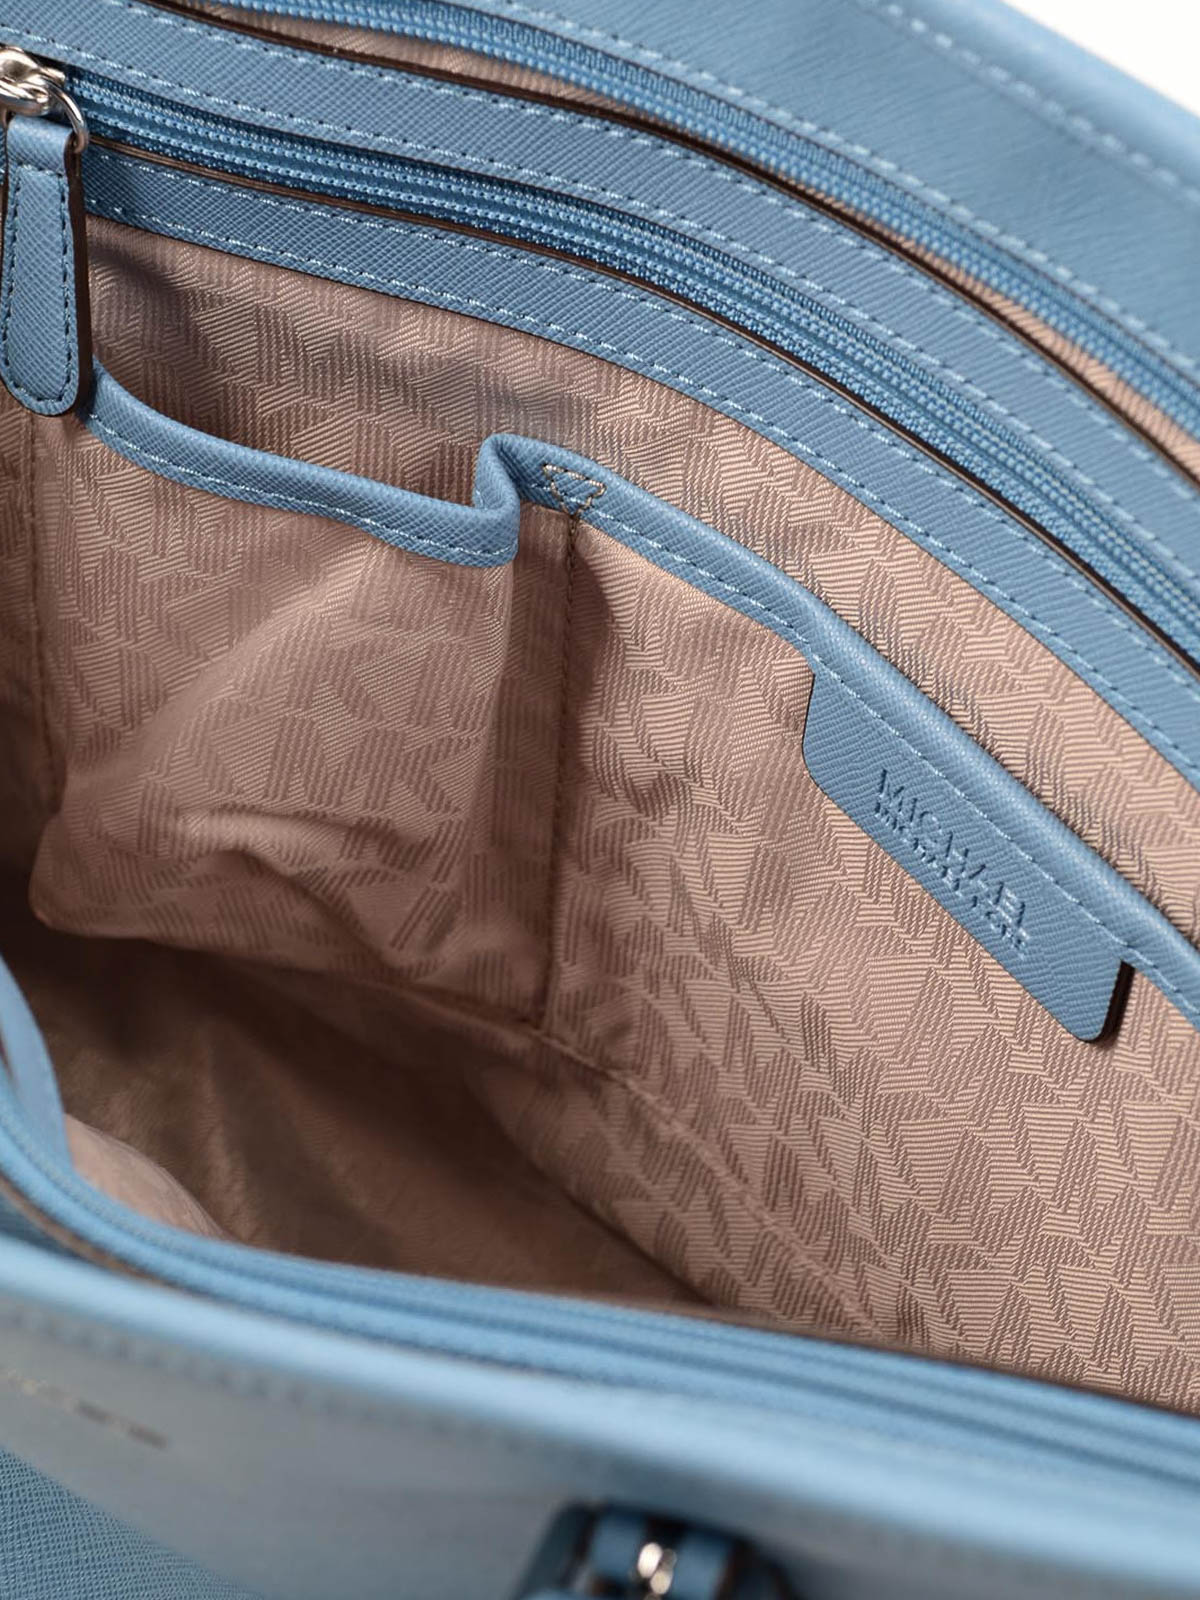 Jet Set Travel Large Saffiano Leather Tote Bag